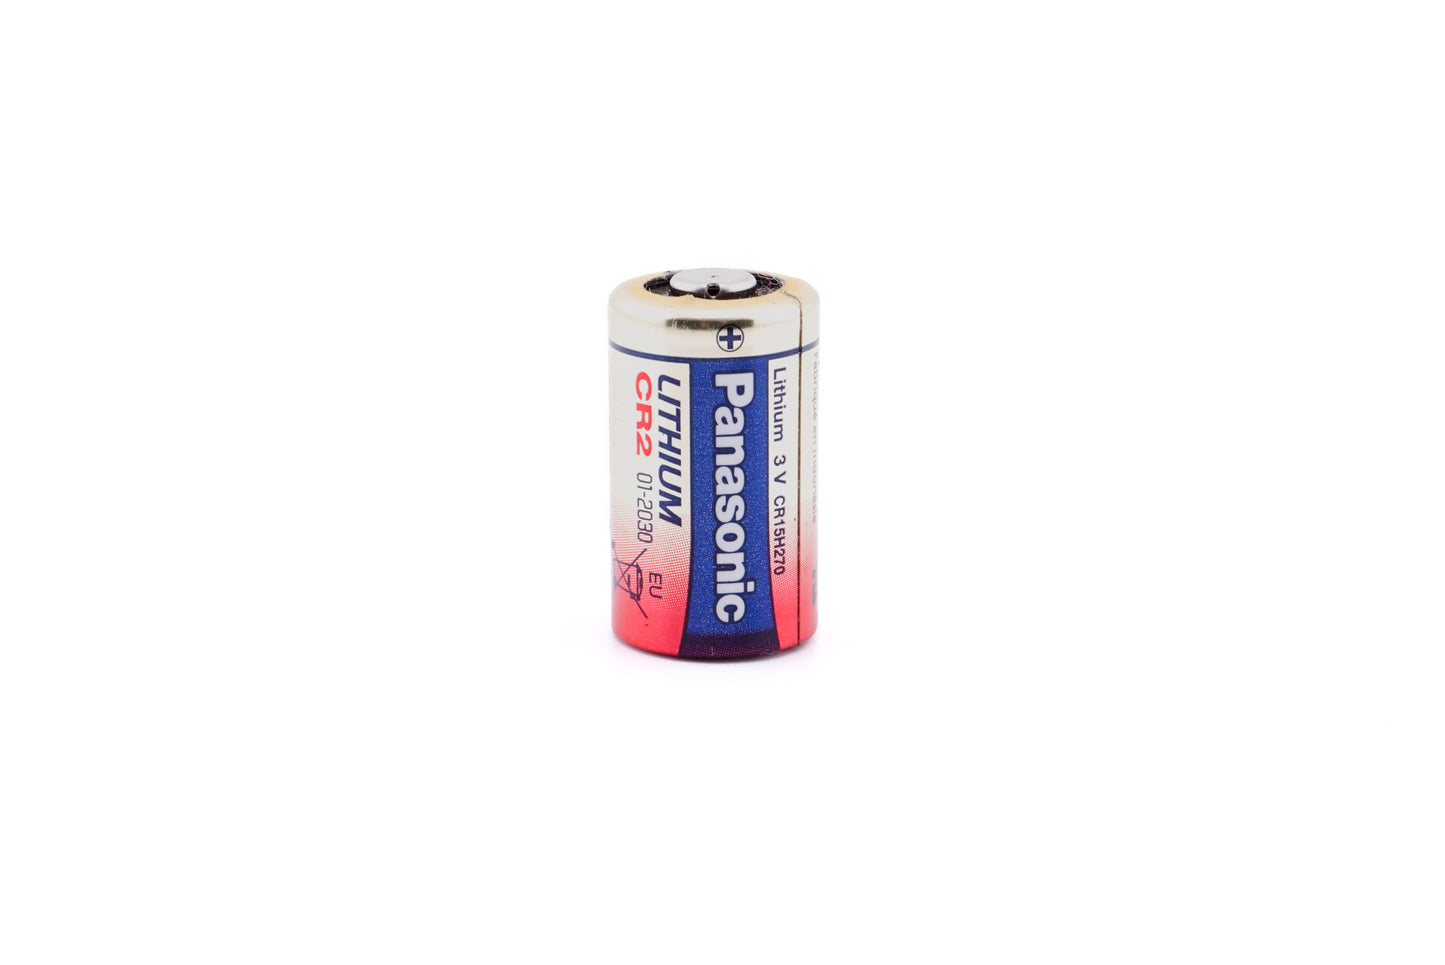 Panasonic CR2 3V Lithium Battery